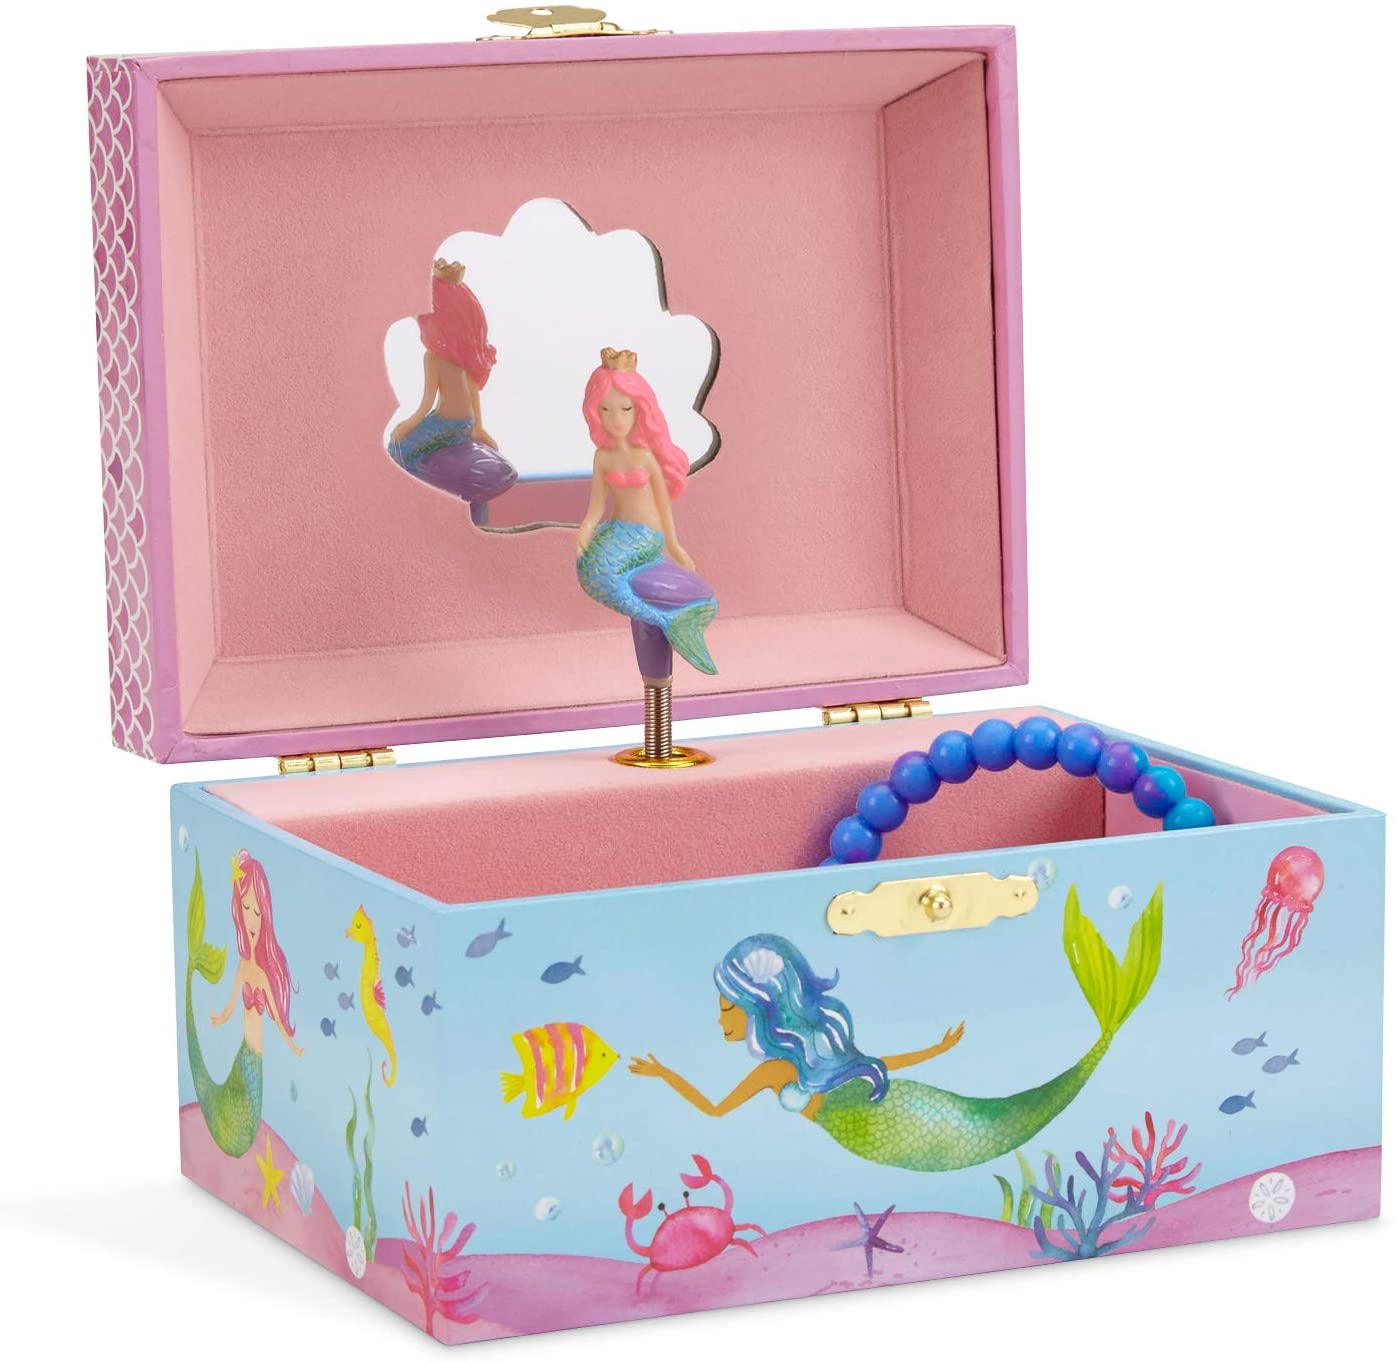 Jewelkeeper Spinning Mermaid Jewelry Music Box Toy